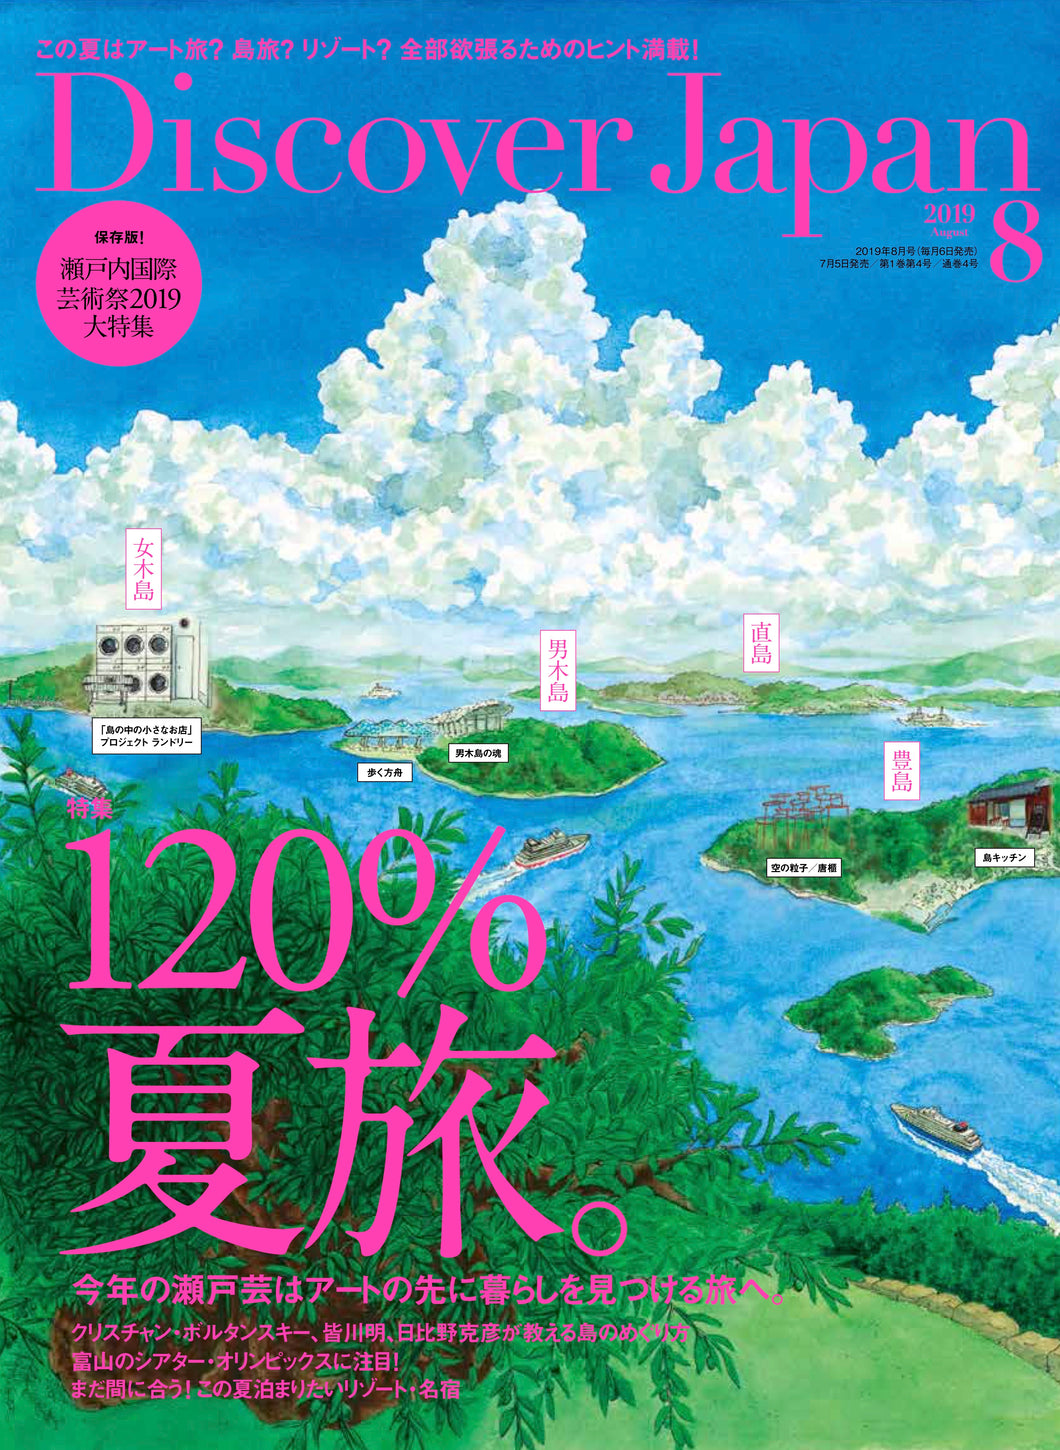 Discover Japan 2019年8月号「120%夏旅。」- 2019/7/5発売